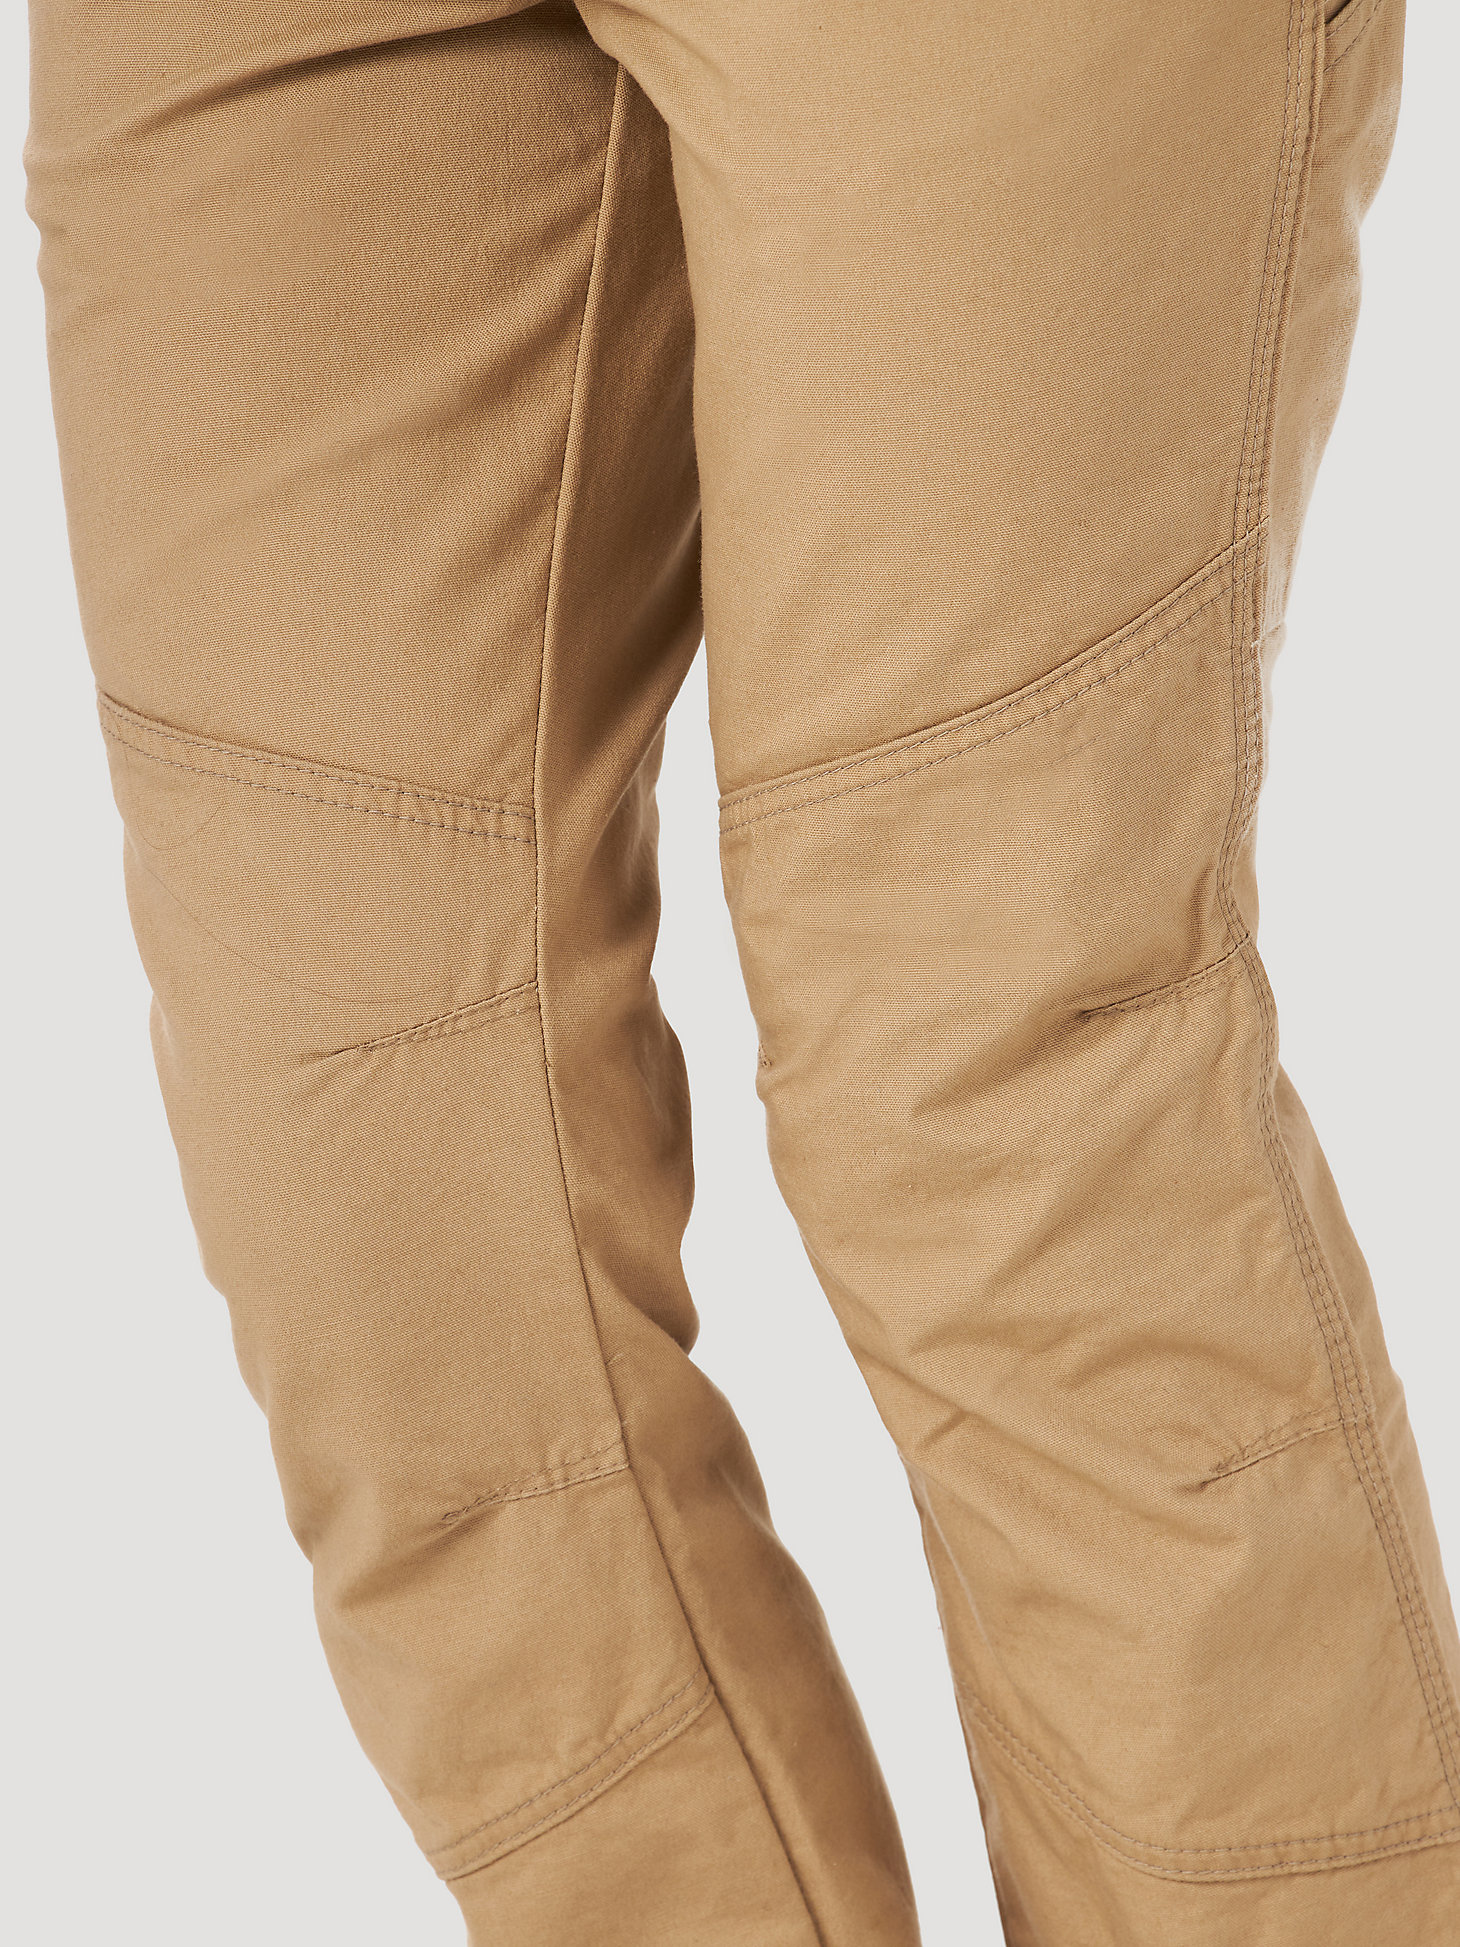 Women's Wrangler® FR Flame Resistant Utility Pant in Golden Khaki alternative view 8